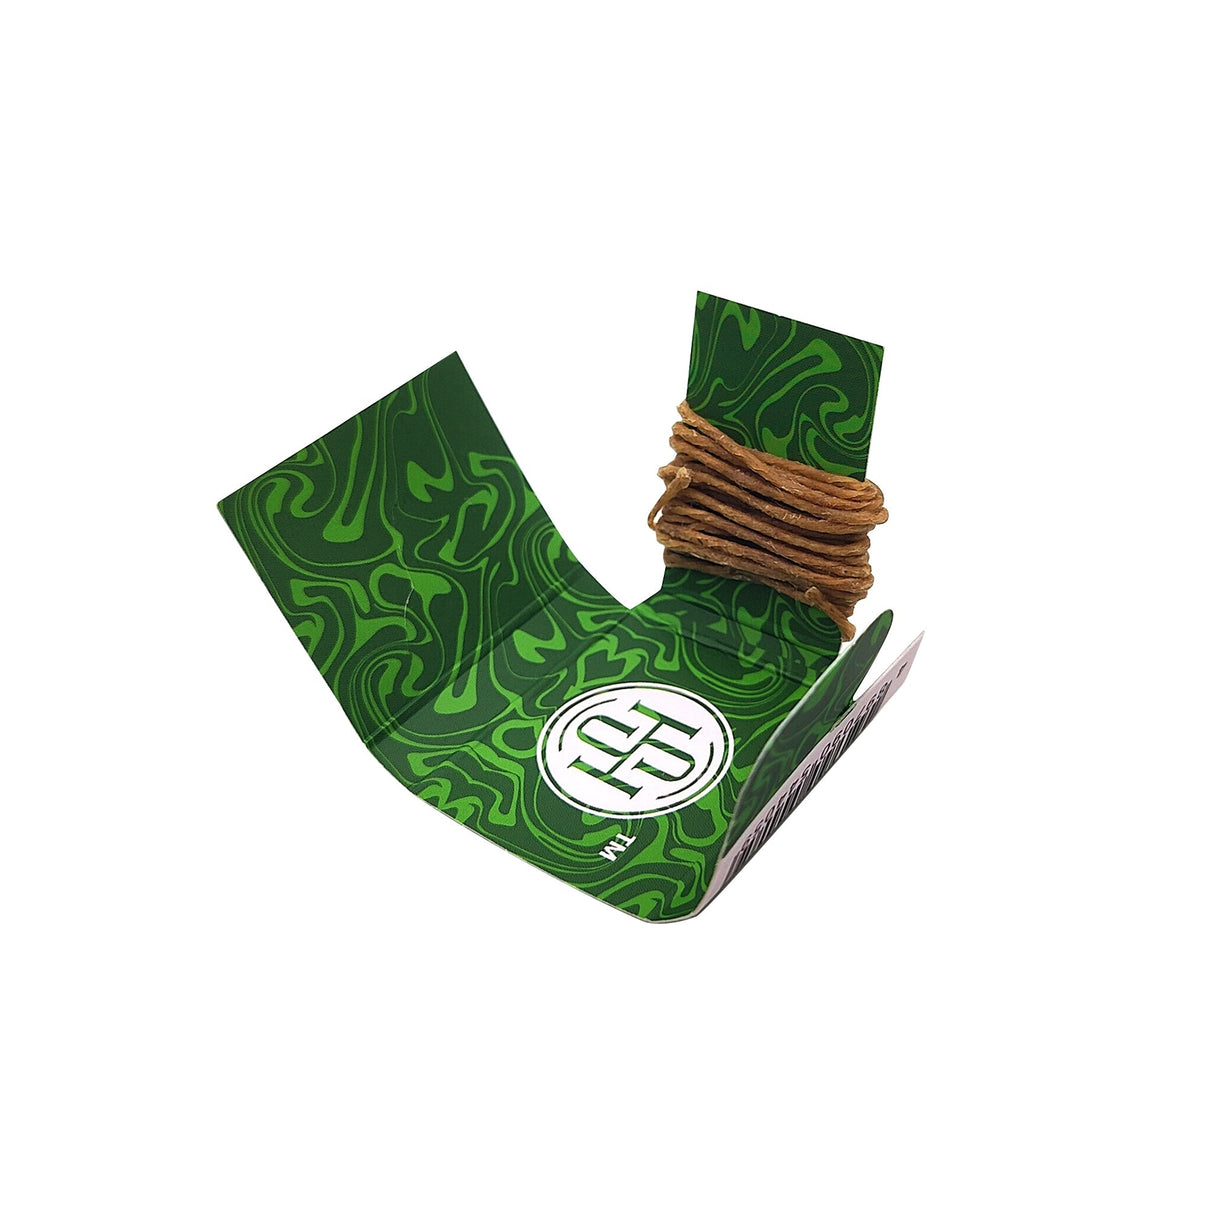 Primo High Society Organic Hemp Wick 3.3' with green branding sleeve, angled view